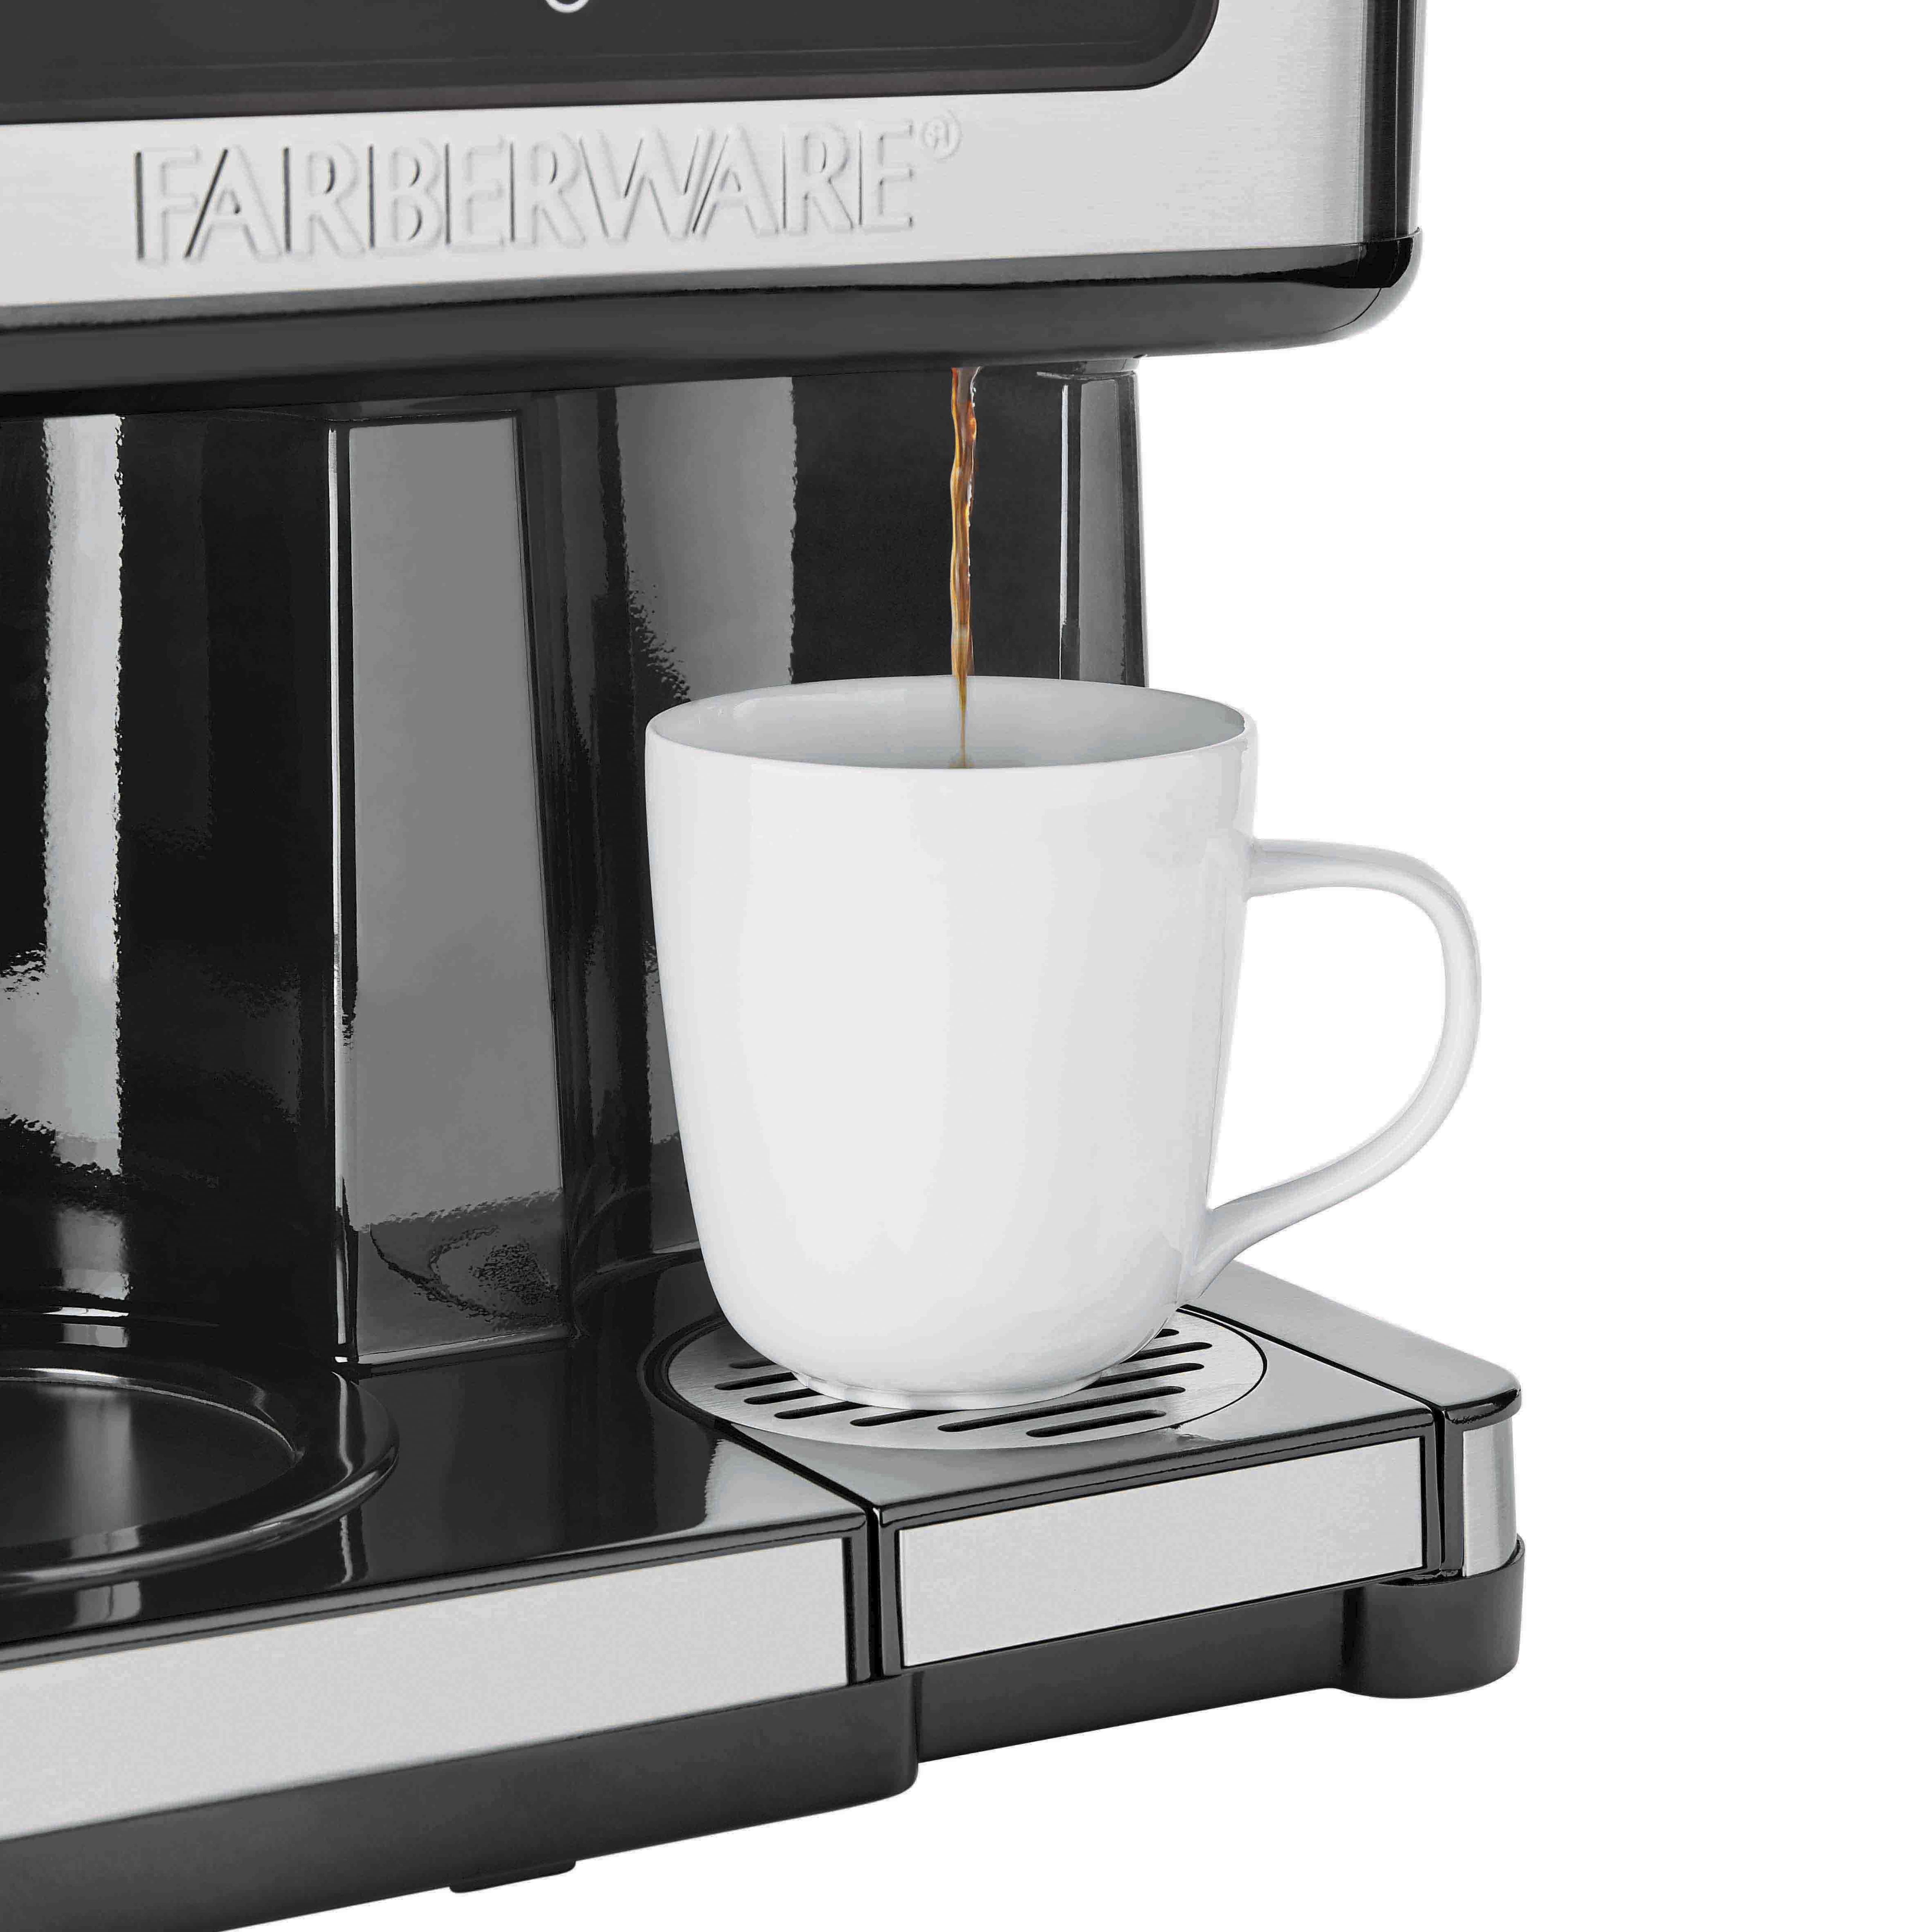 Farberware Dual Brew Side by Side Coffee Maker - FW61100042831 / BRAND  NEW!!!